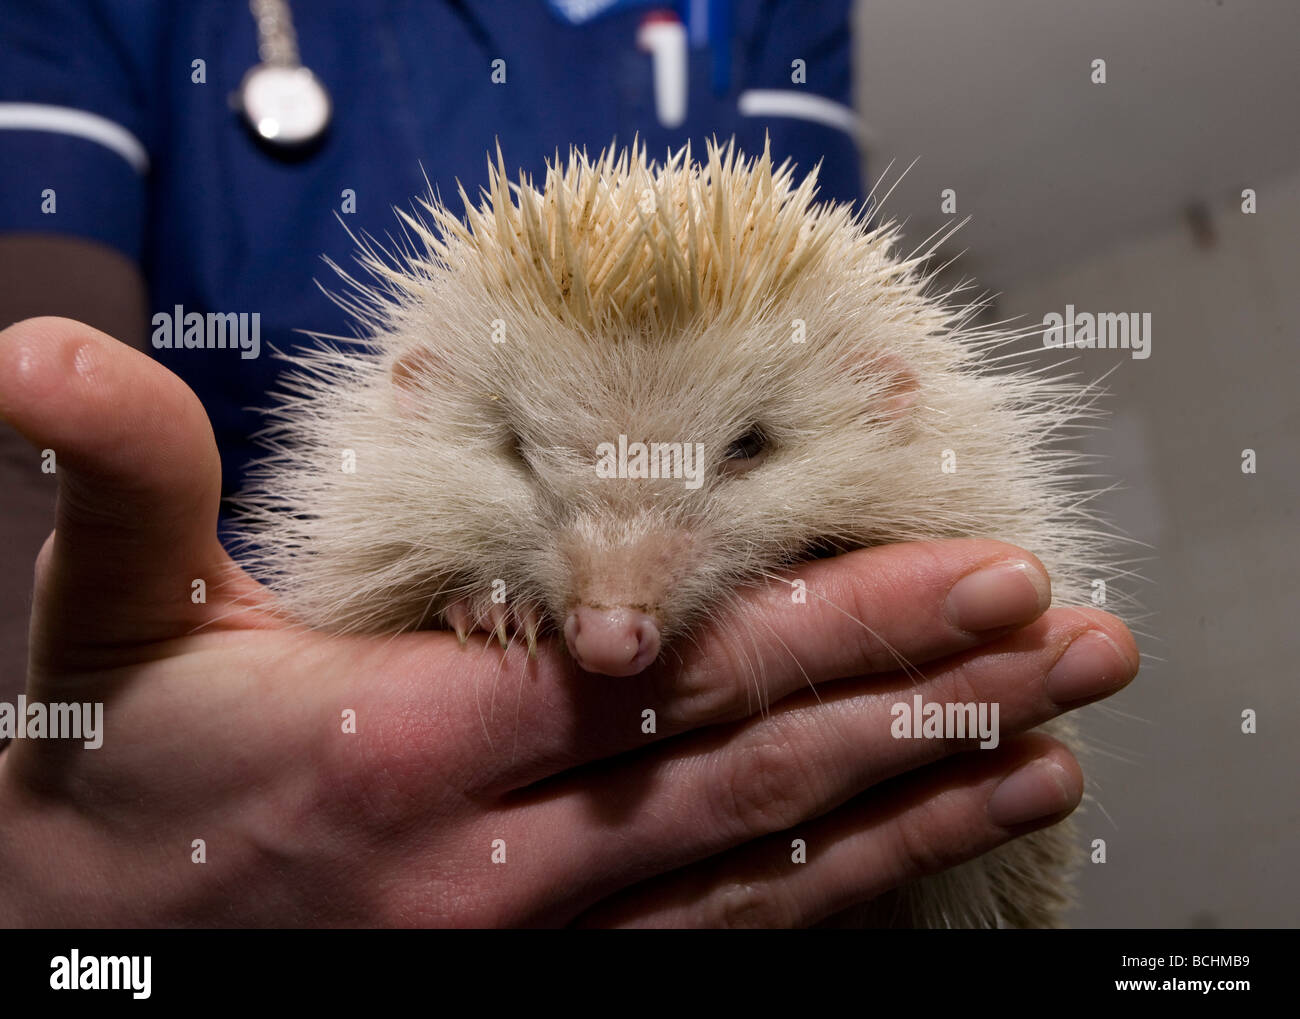 Albino Hedgehog, Erinaceus europaeus, in hand Stock Photo